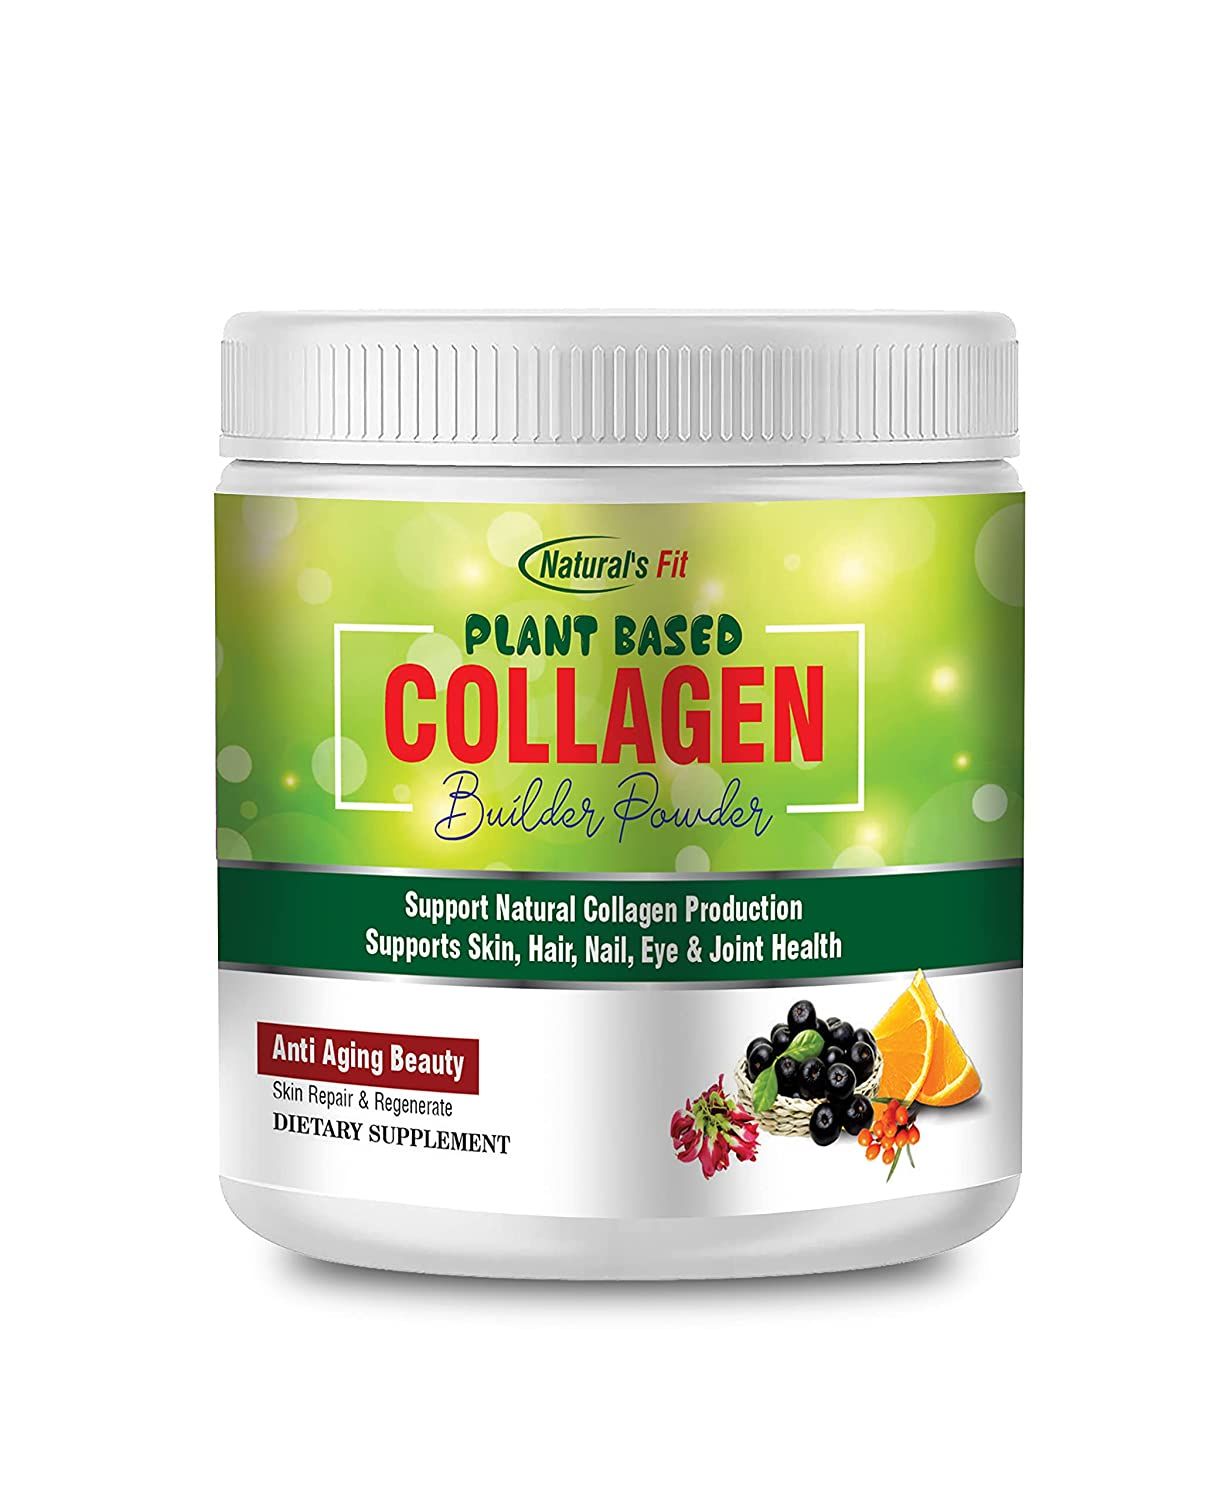 Natural's Fit Plant Based Collagen Image